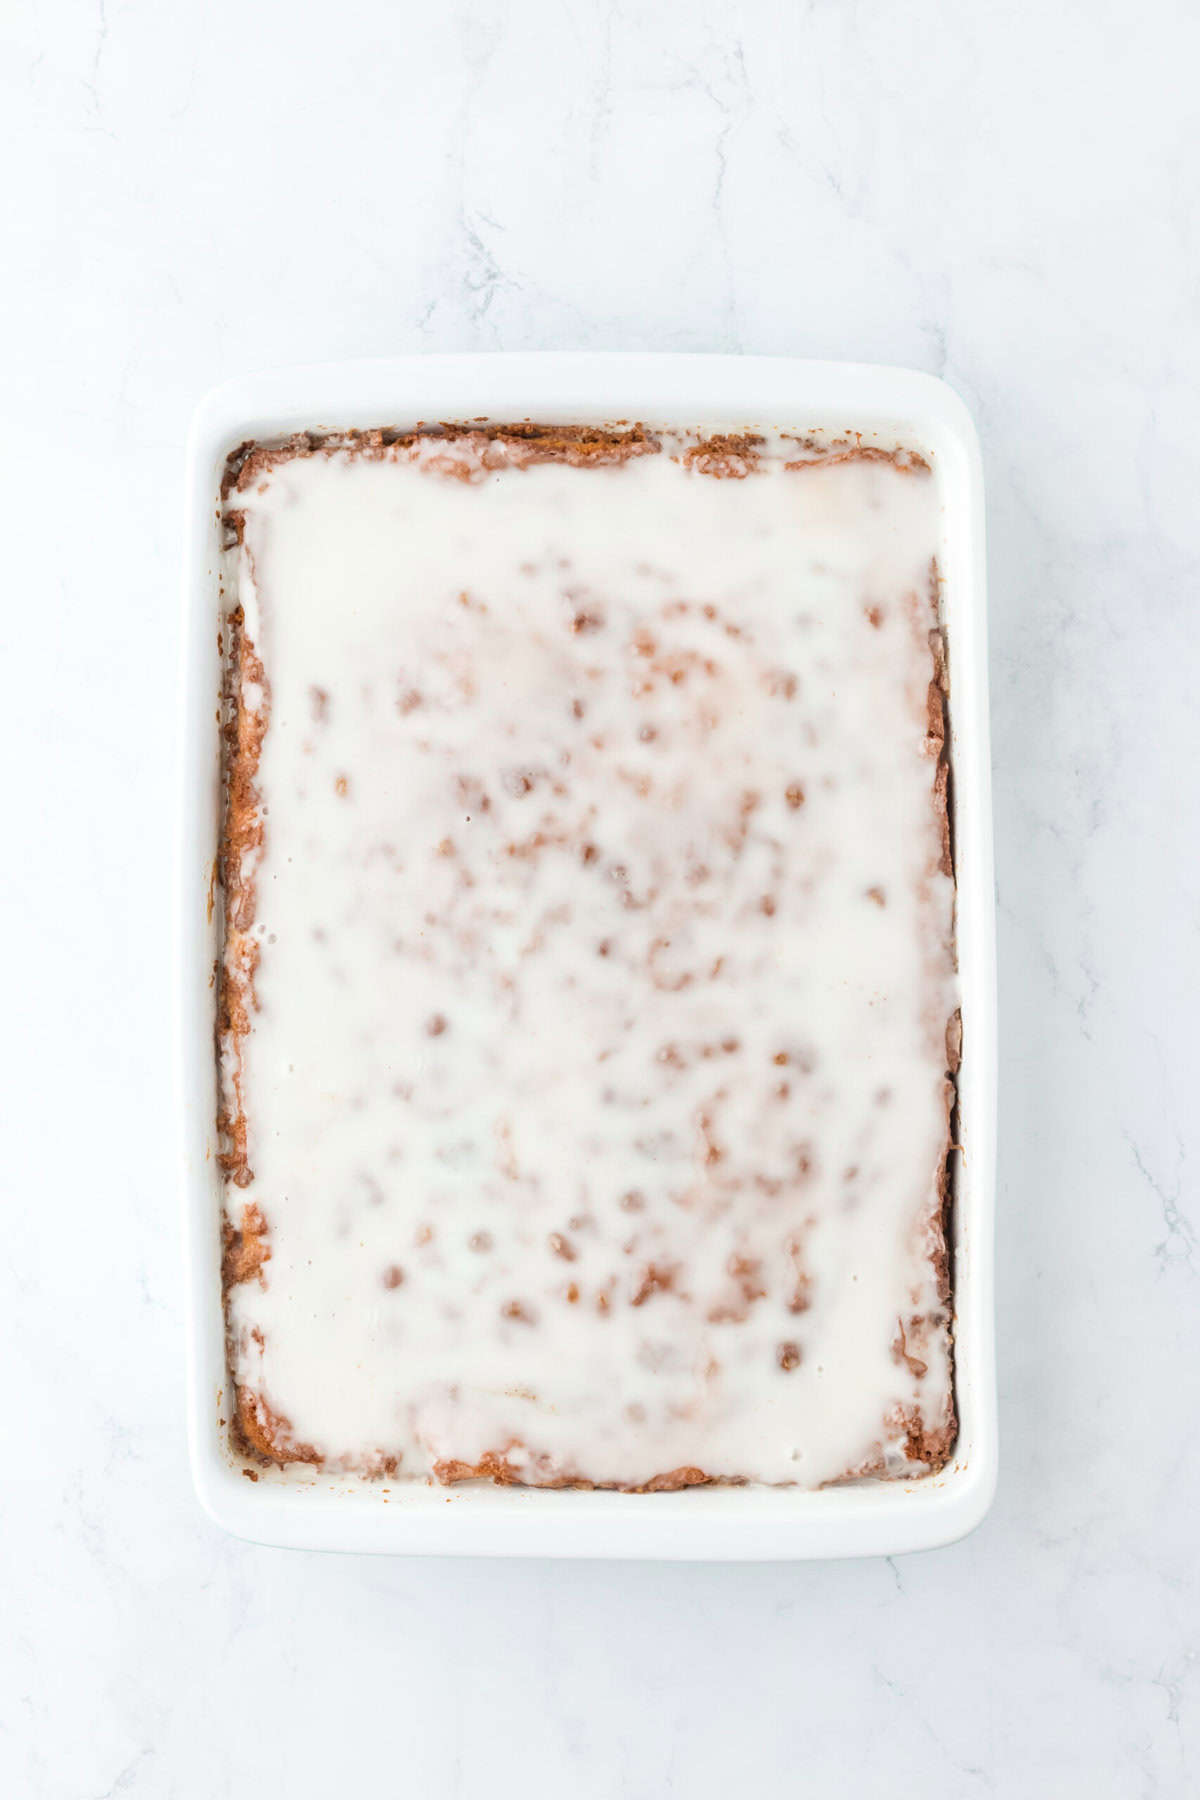 A glazed honey bun cake against a white background